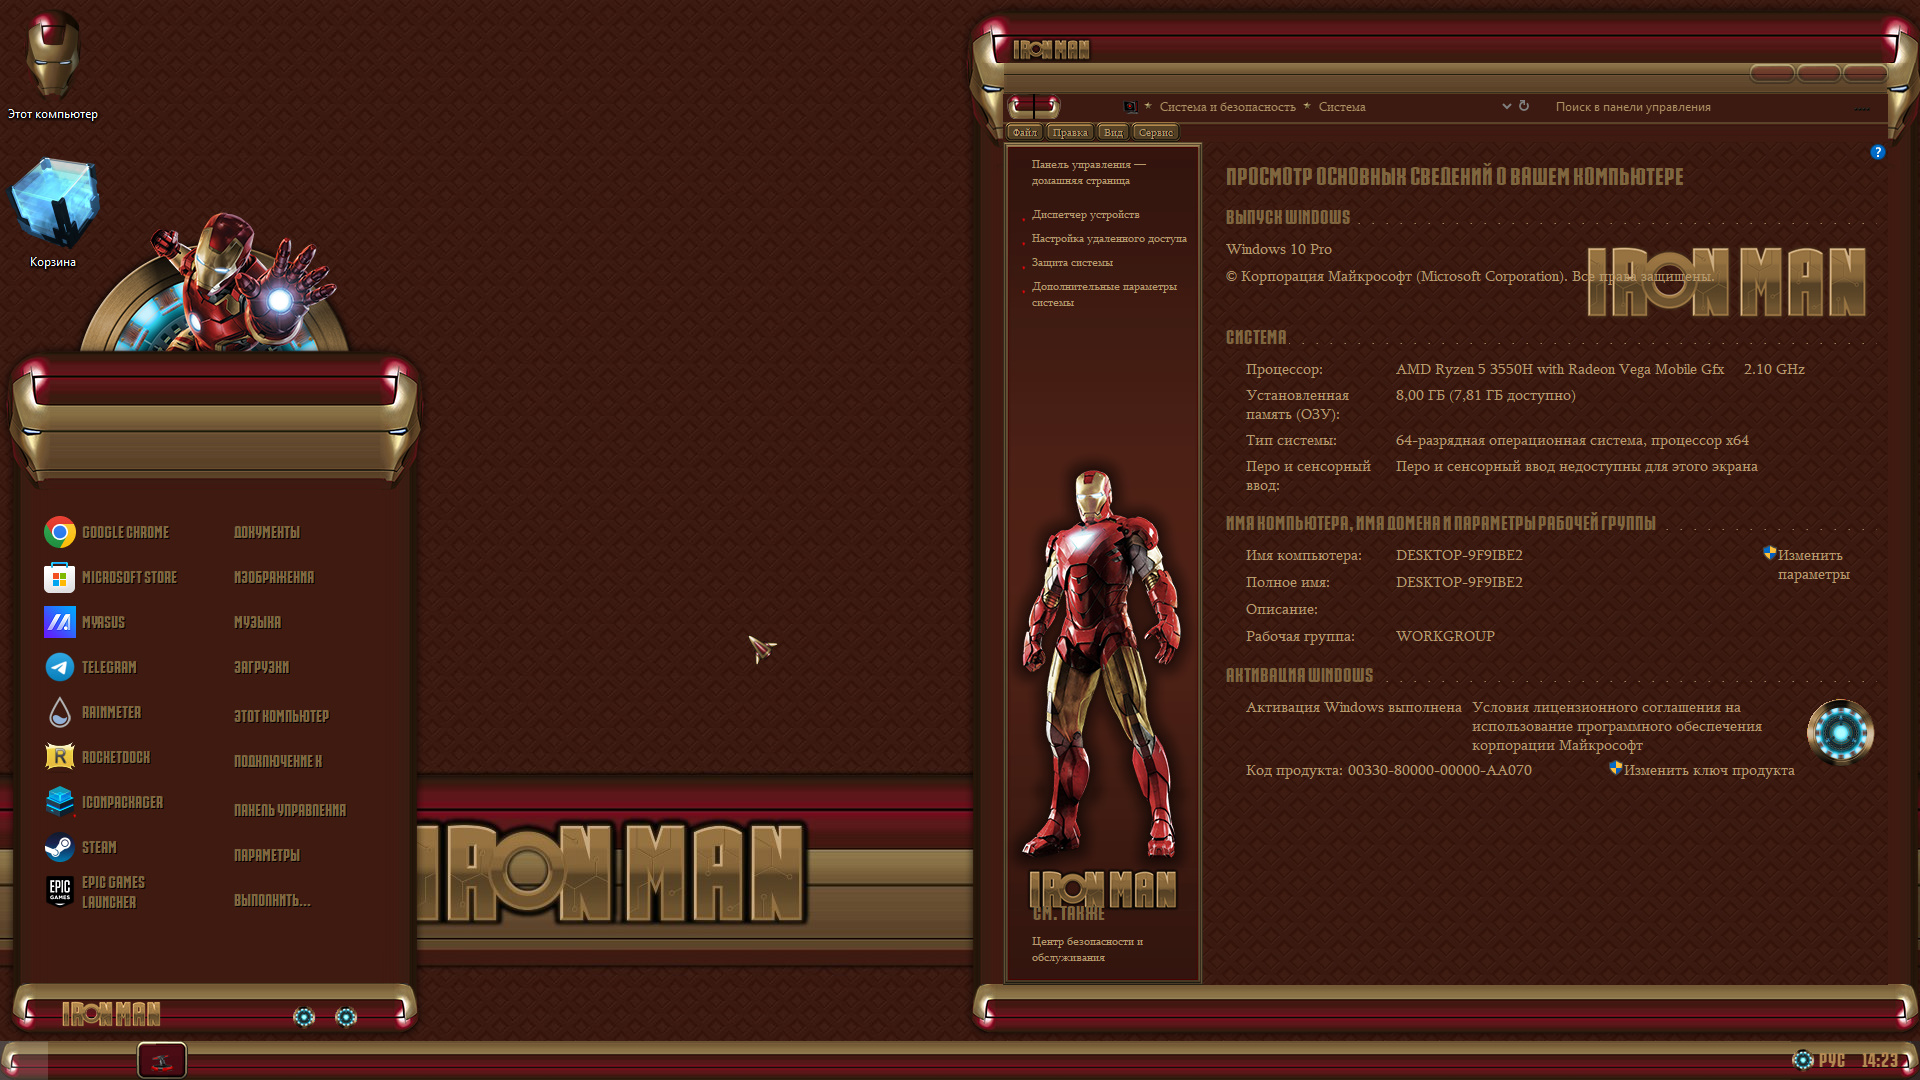 Iron Man Premium Themes for Windows 10  by ORTHODOXX67